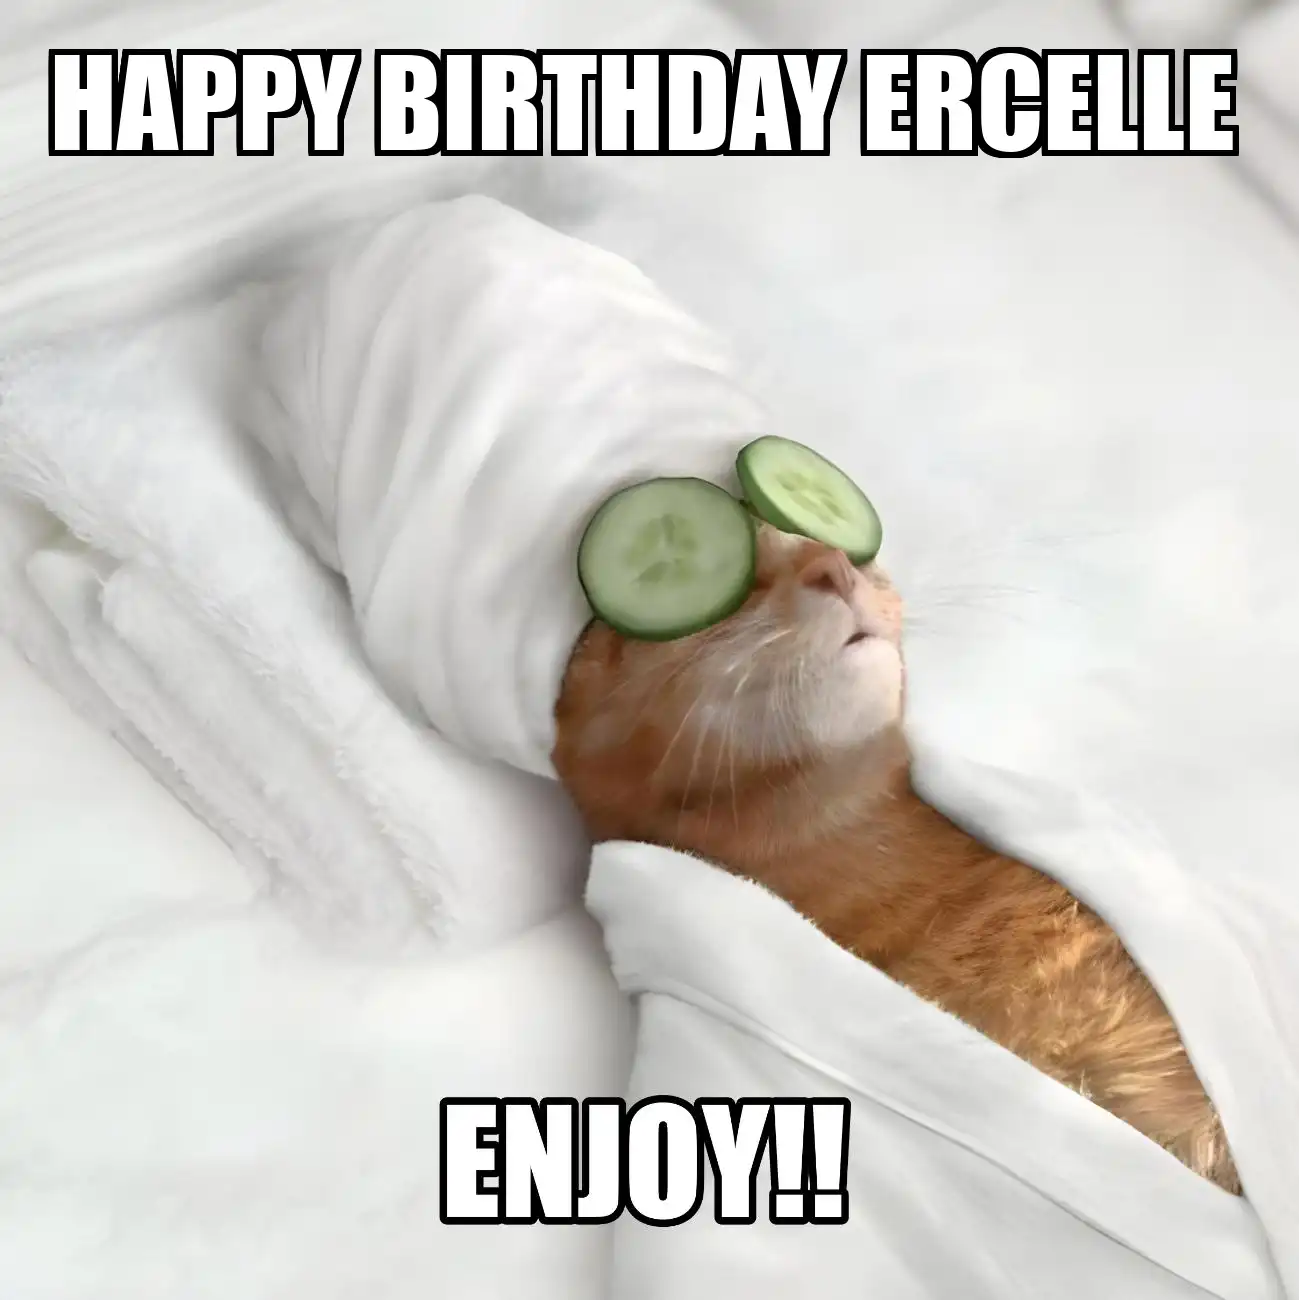 Happy Birthday Ercelle Enjoy Cat Meme